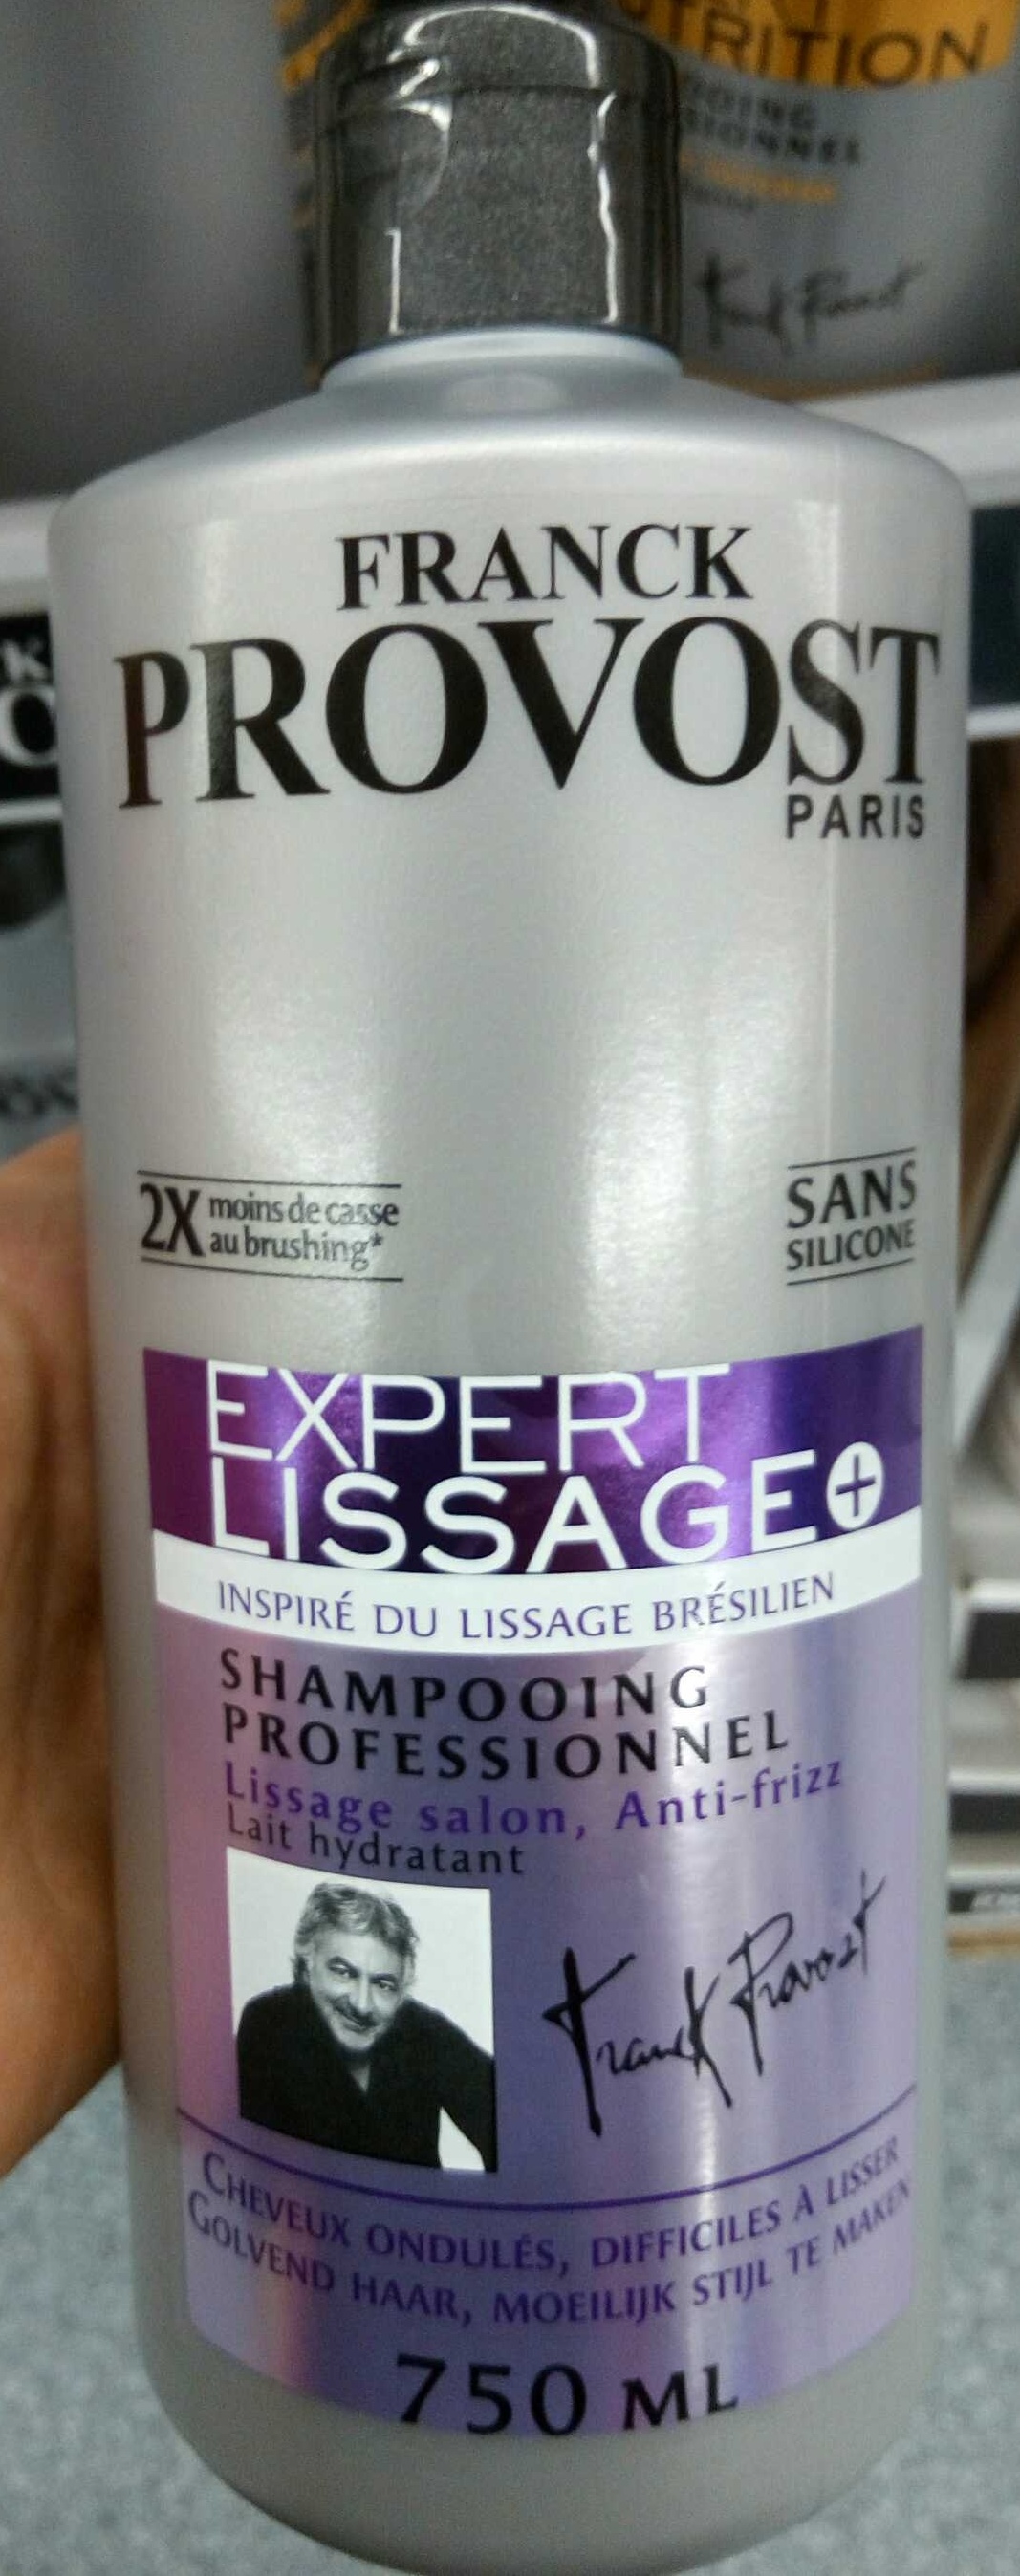 Expert lissage+ shampooing professionnel - Продукт - fr